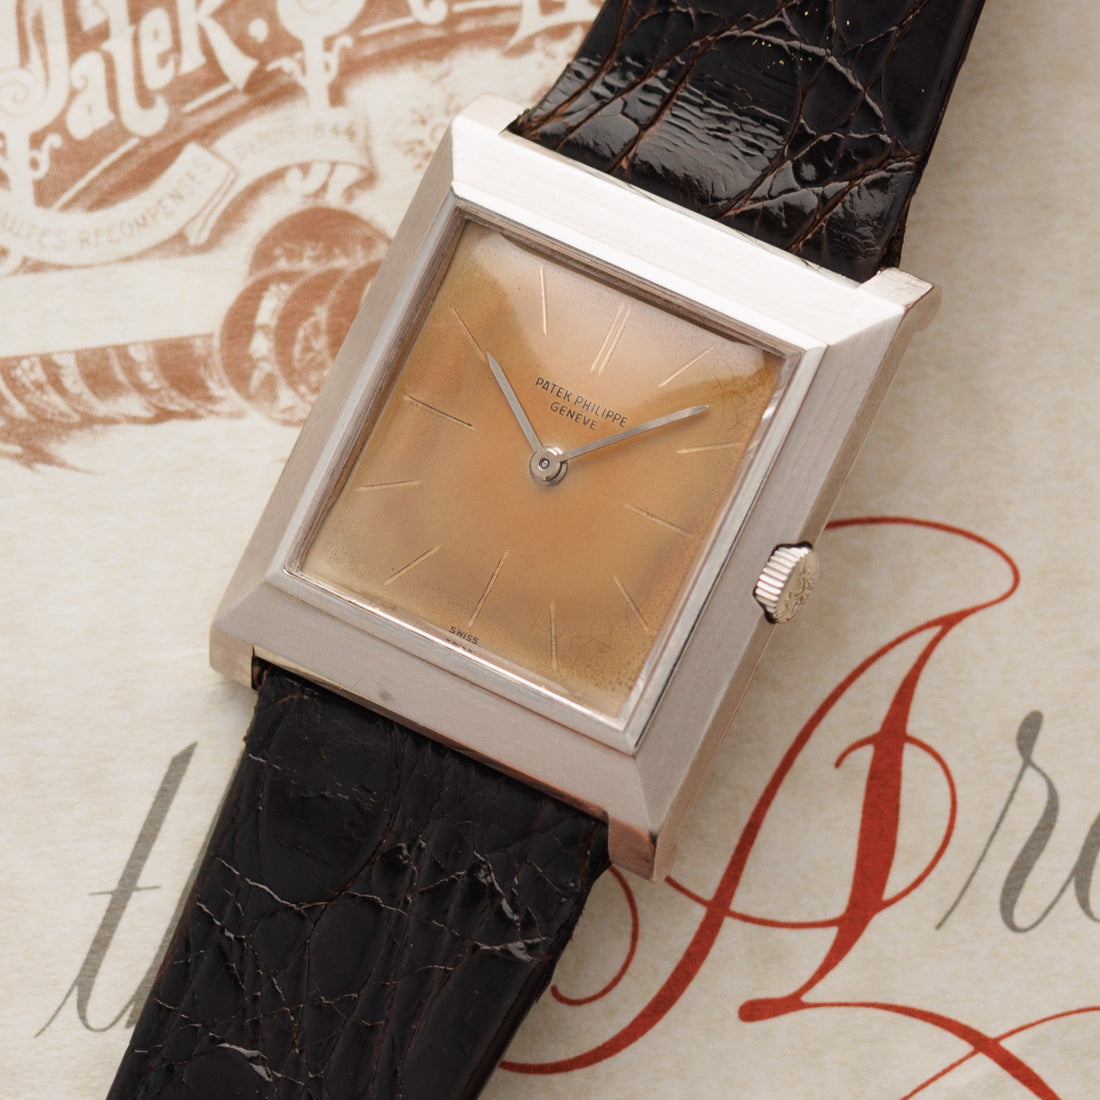 Patek Philippe White Gold Square Watch Ref. 3404